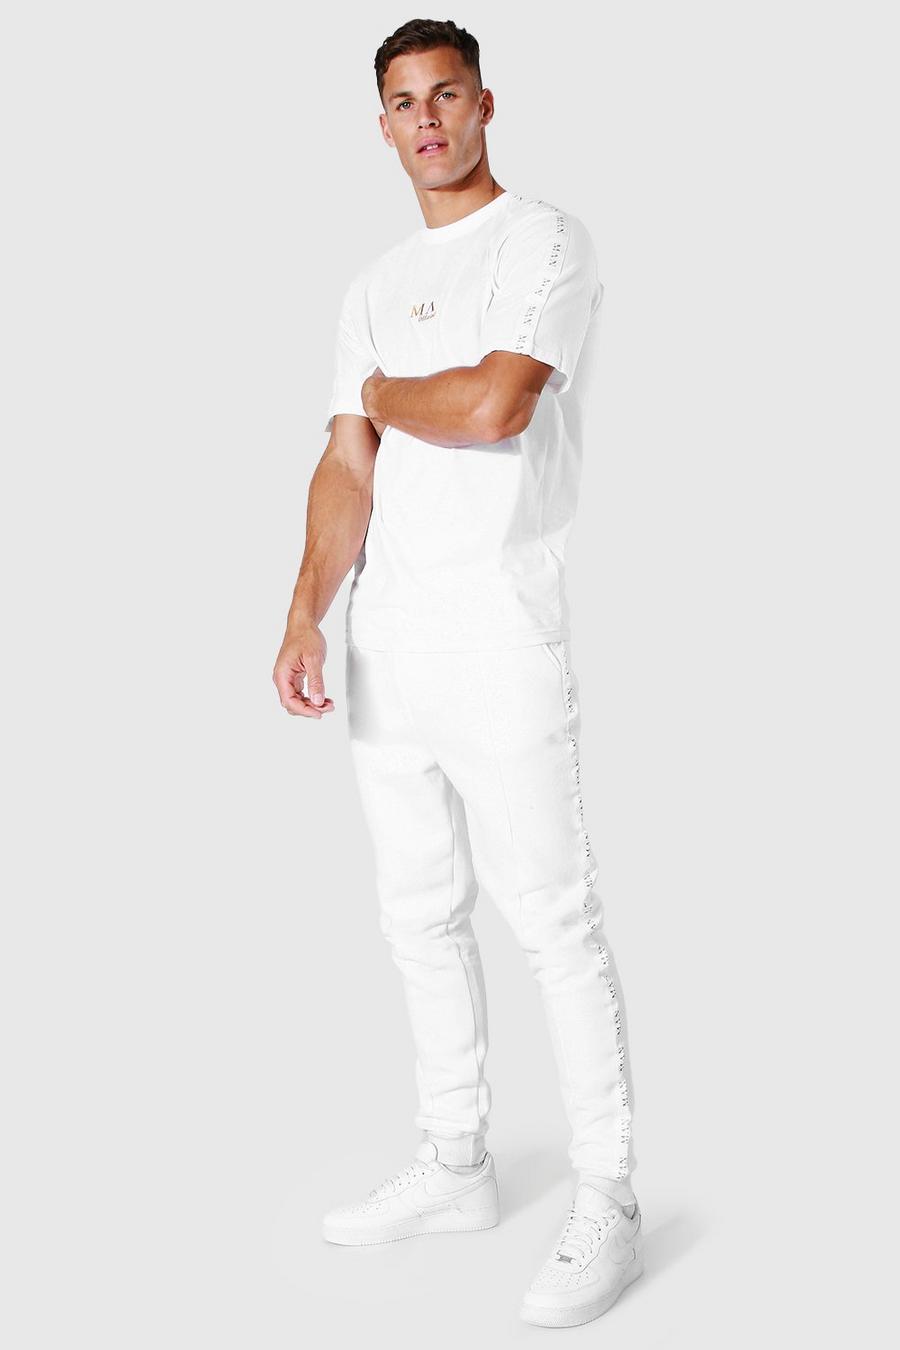 T-shirt Tall Man Gold con strisccia & pantaloni tuta con nervature, White blanco image number 1